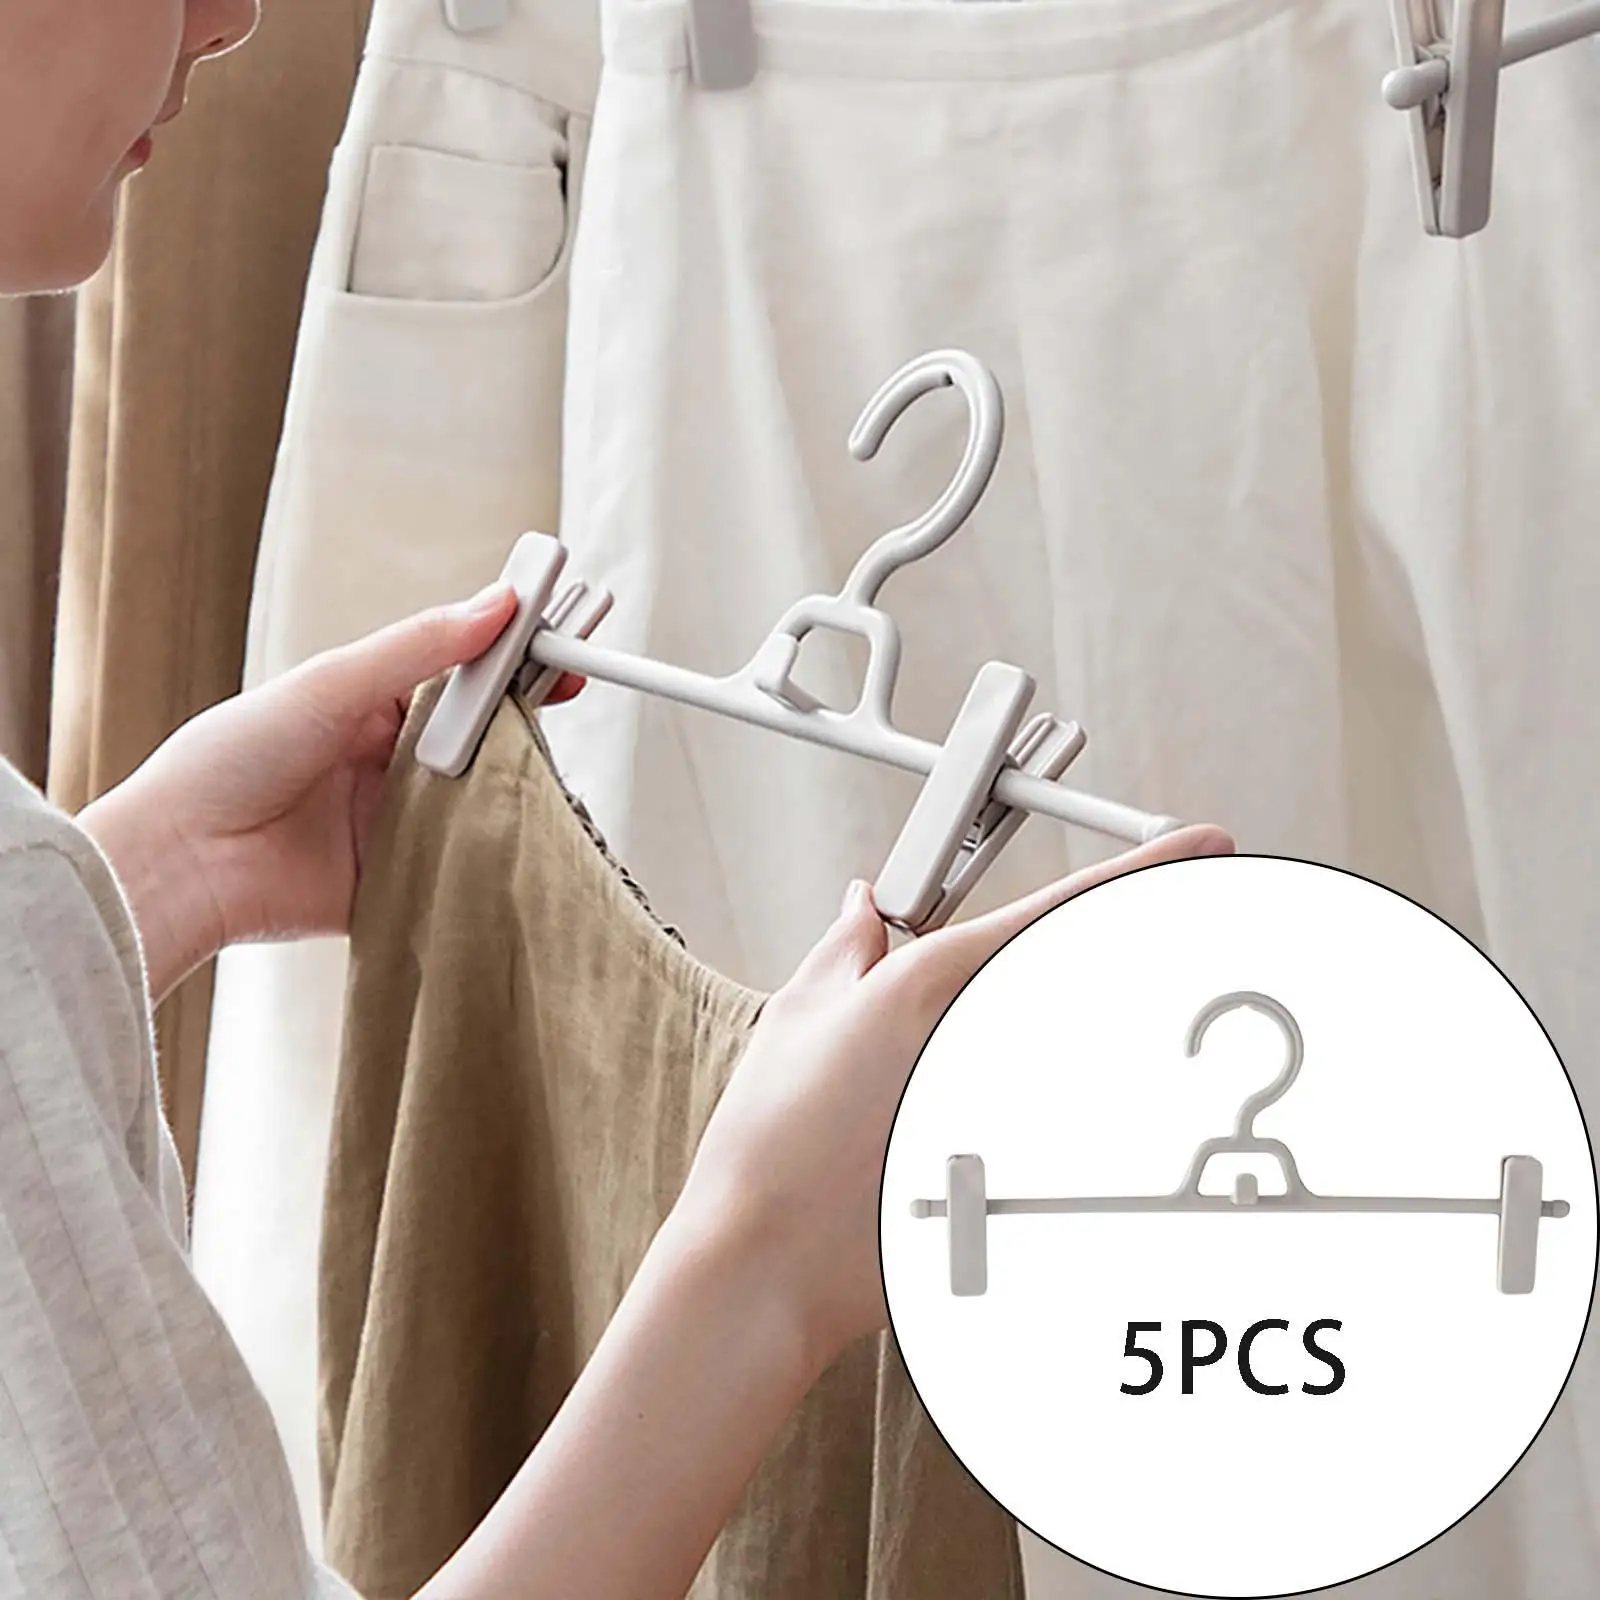 5Pcs Pant Hangers Adult Children Clothes Hangers Garment Clothes Organizer Durable and Sturdy Adjustable Clips Non Slip